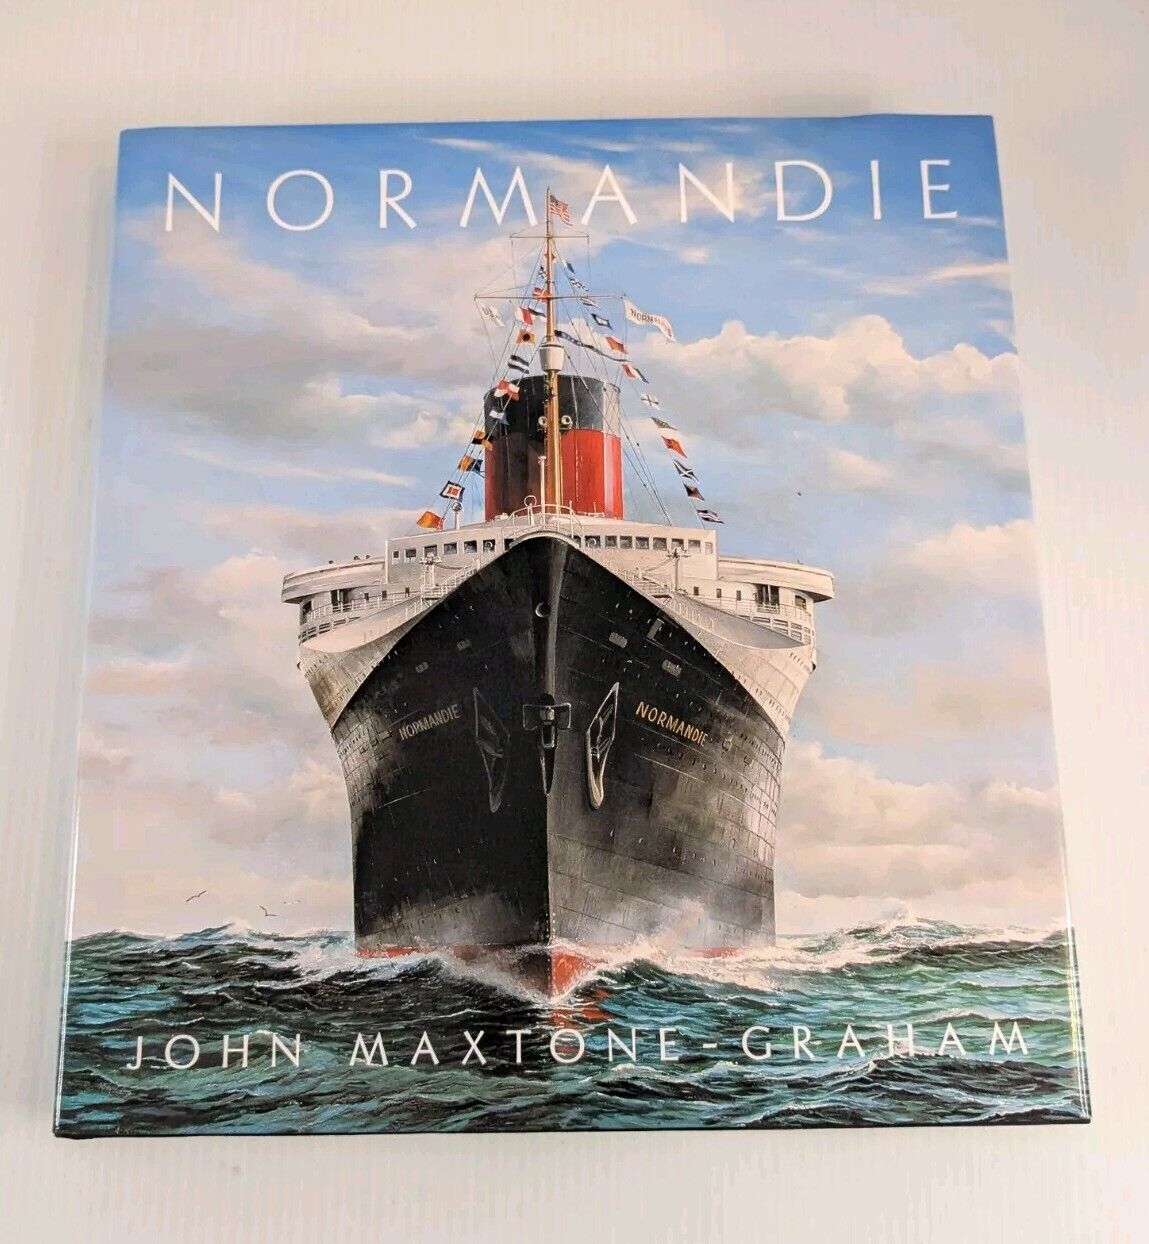 NORMANDIE: France\'s Legendary Art Deco Ocean Liner by John Maxtone-Graham